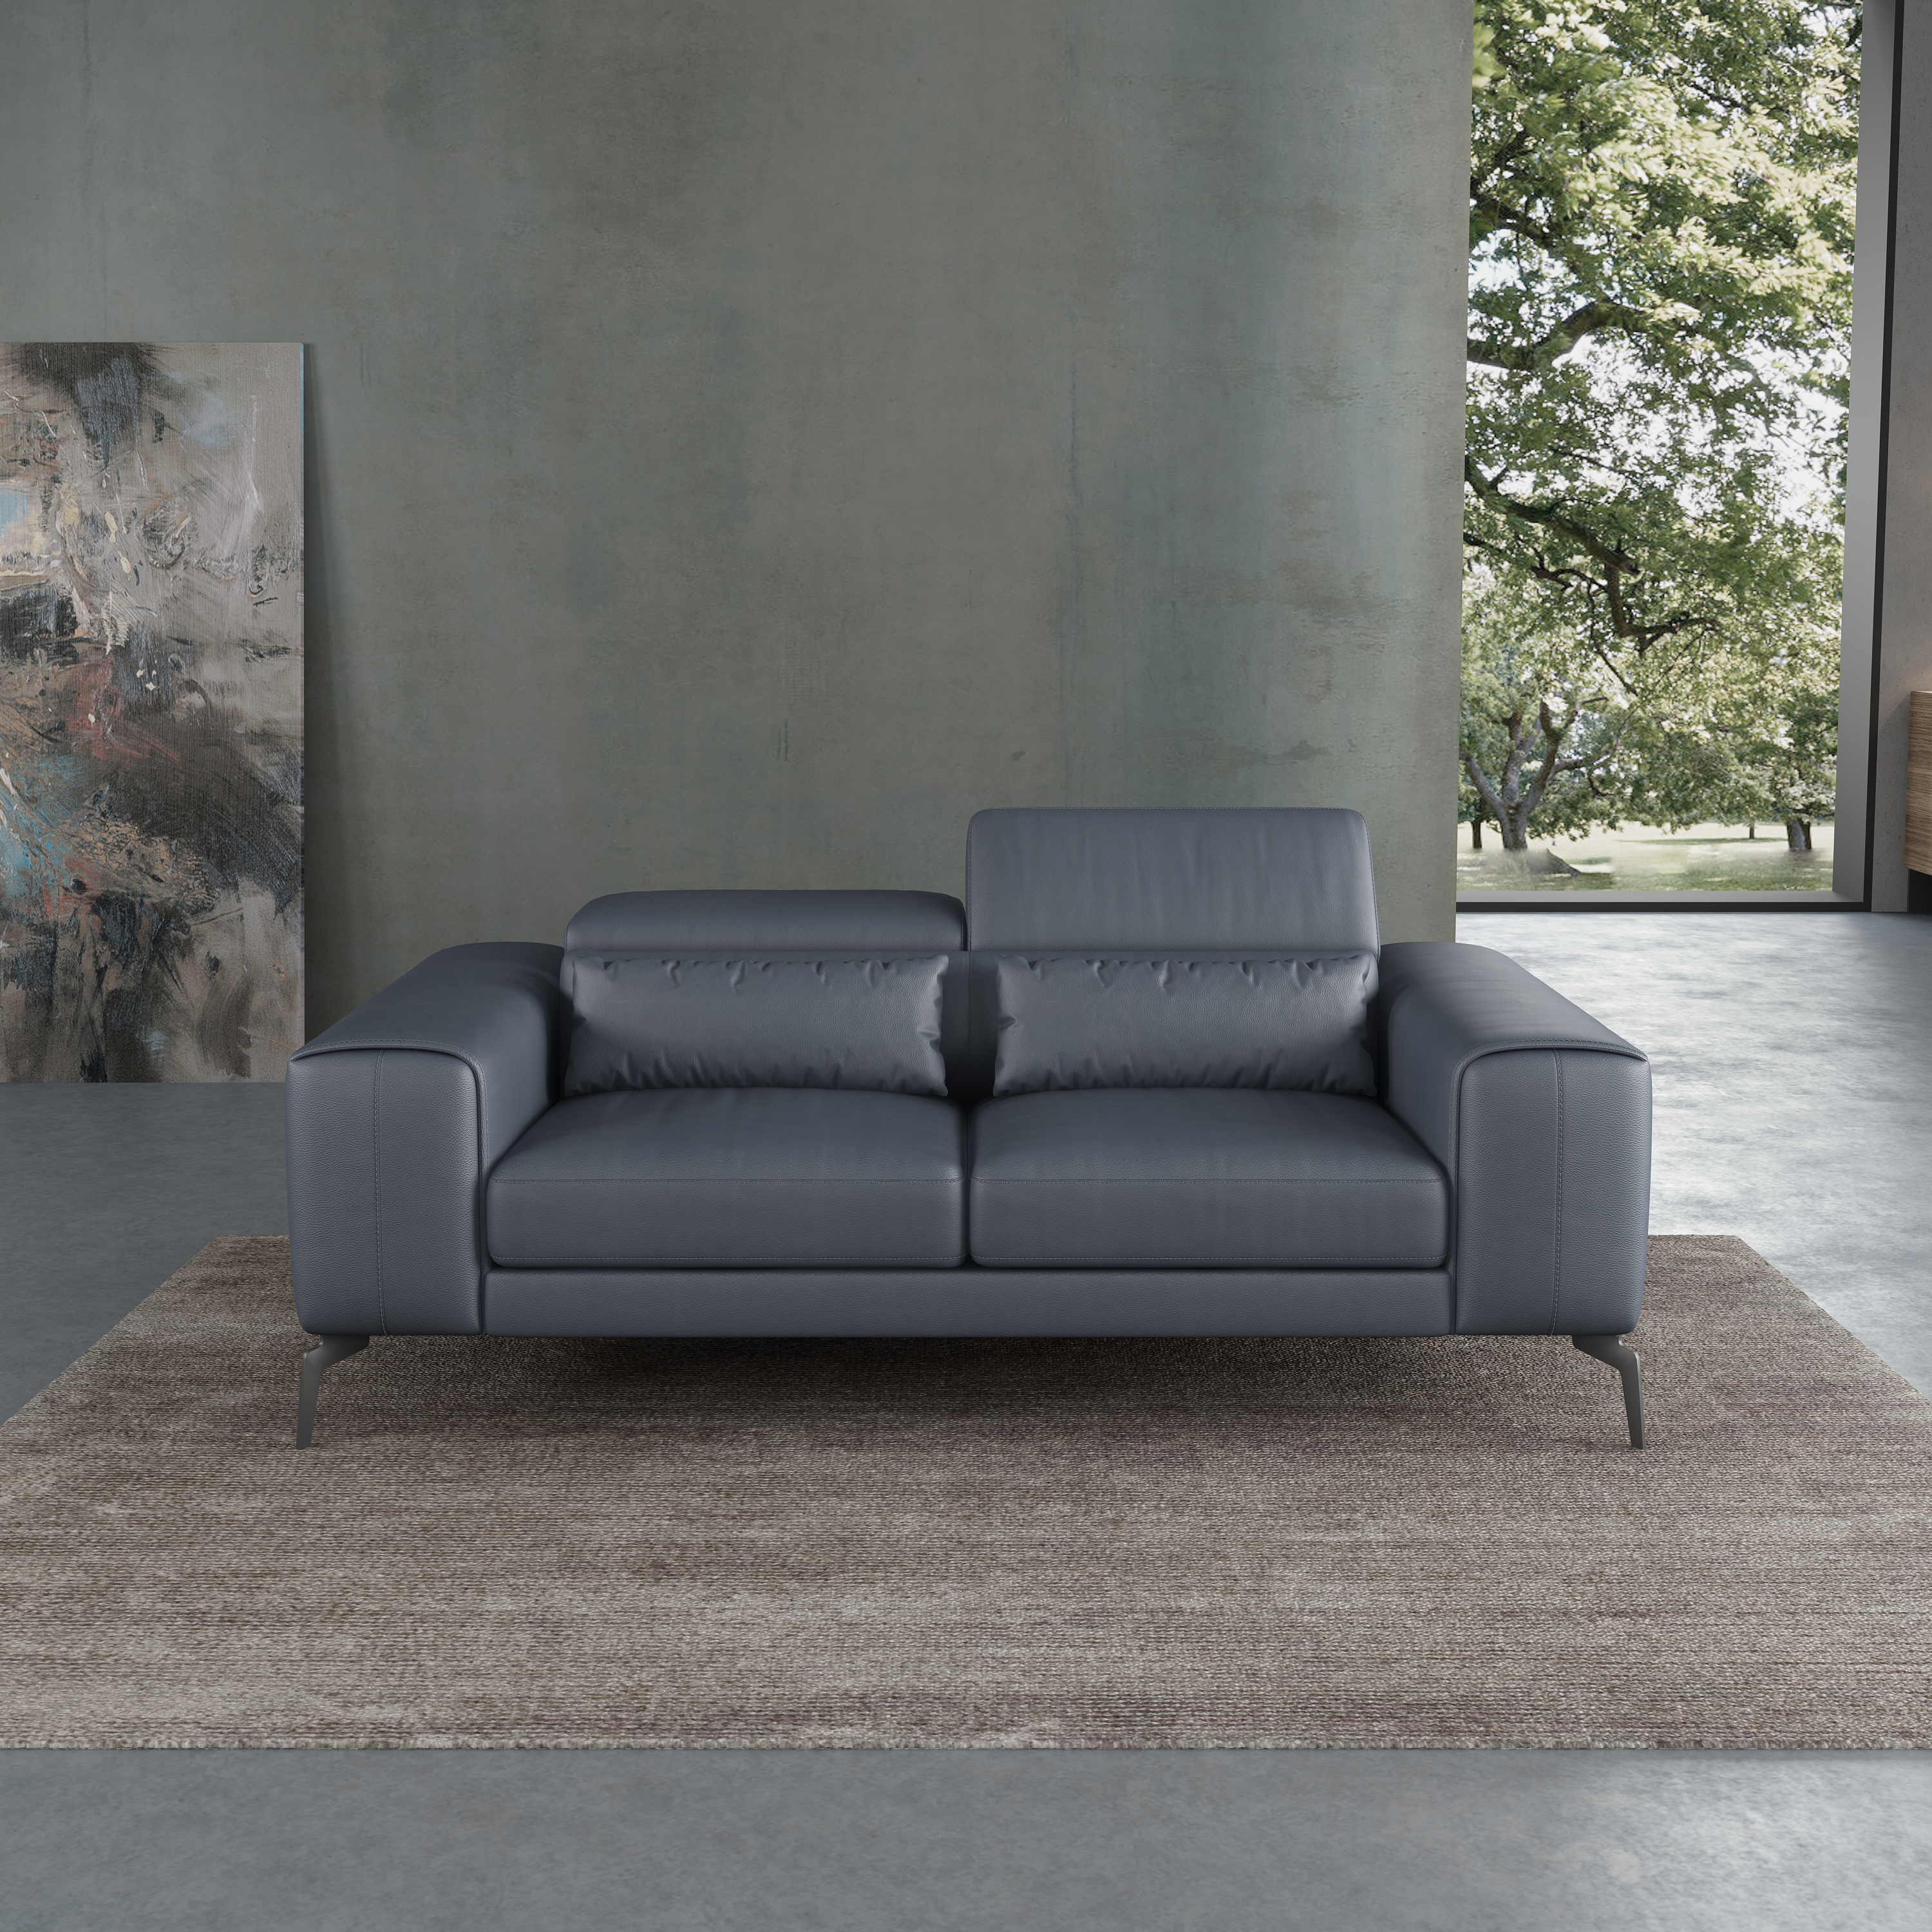 European Furniture - Cavour 3 Piece Sofa Set Gray Italian Leather - EF-12550 - New Star Living